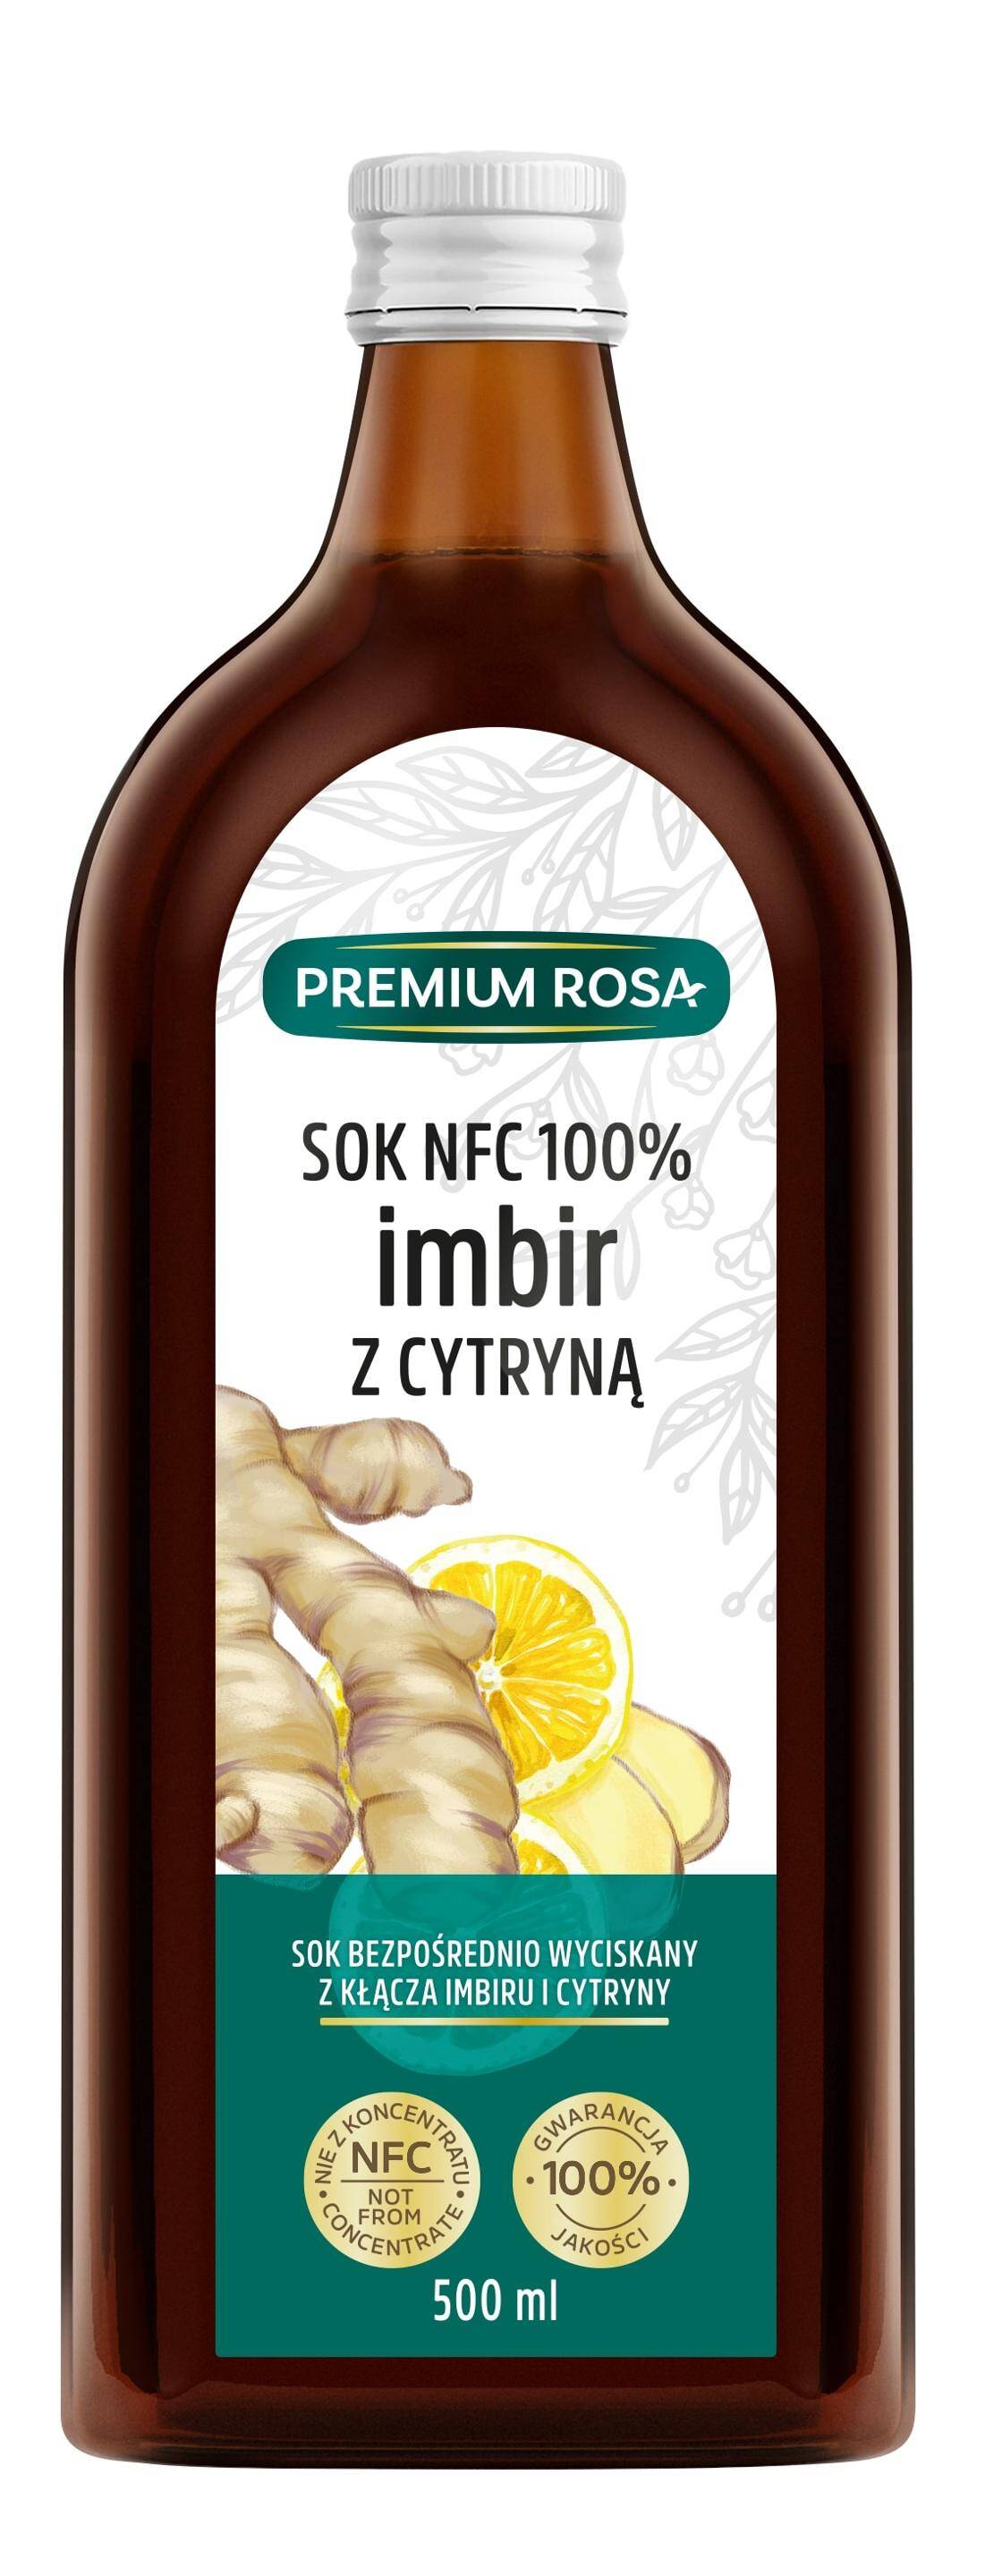 Premium Rosa Sok z imbirem i cytryną